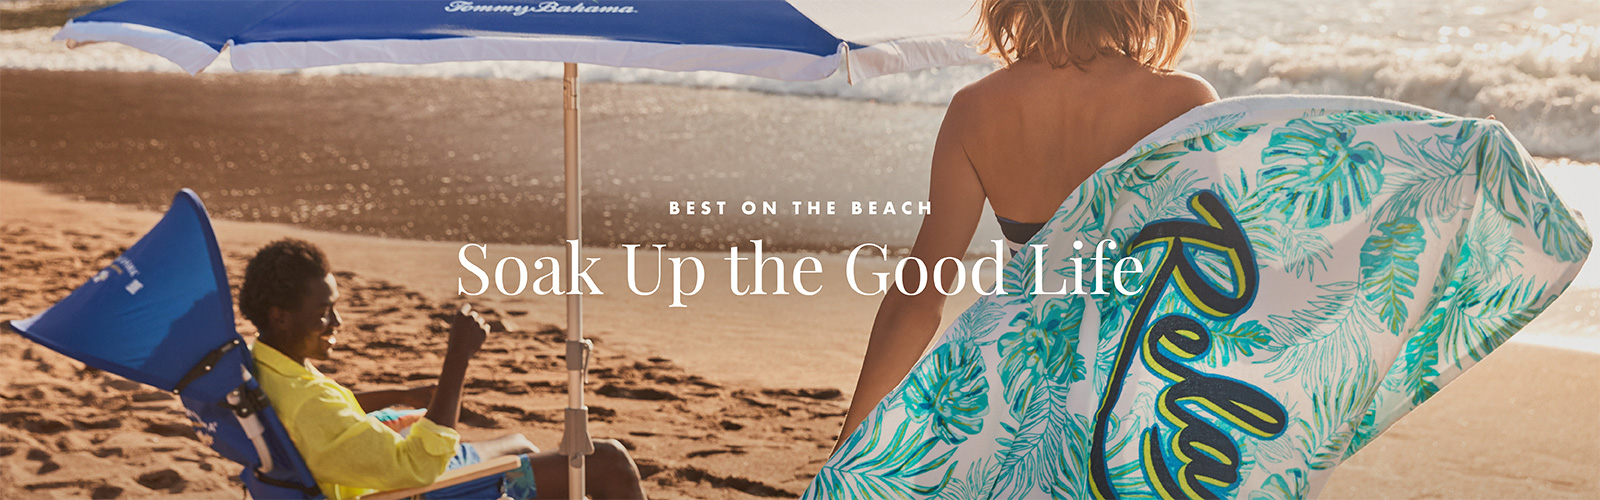 Best On The Beach - Soak Up the Good Life